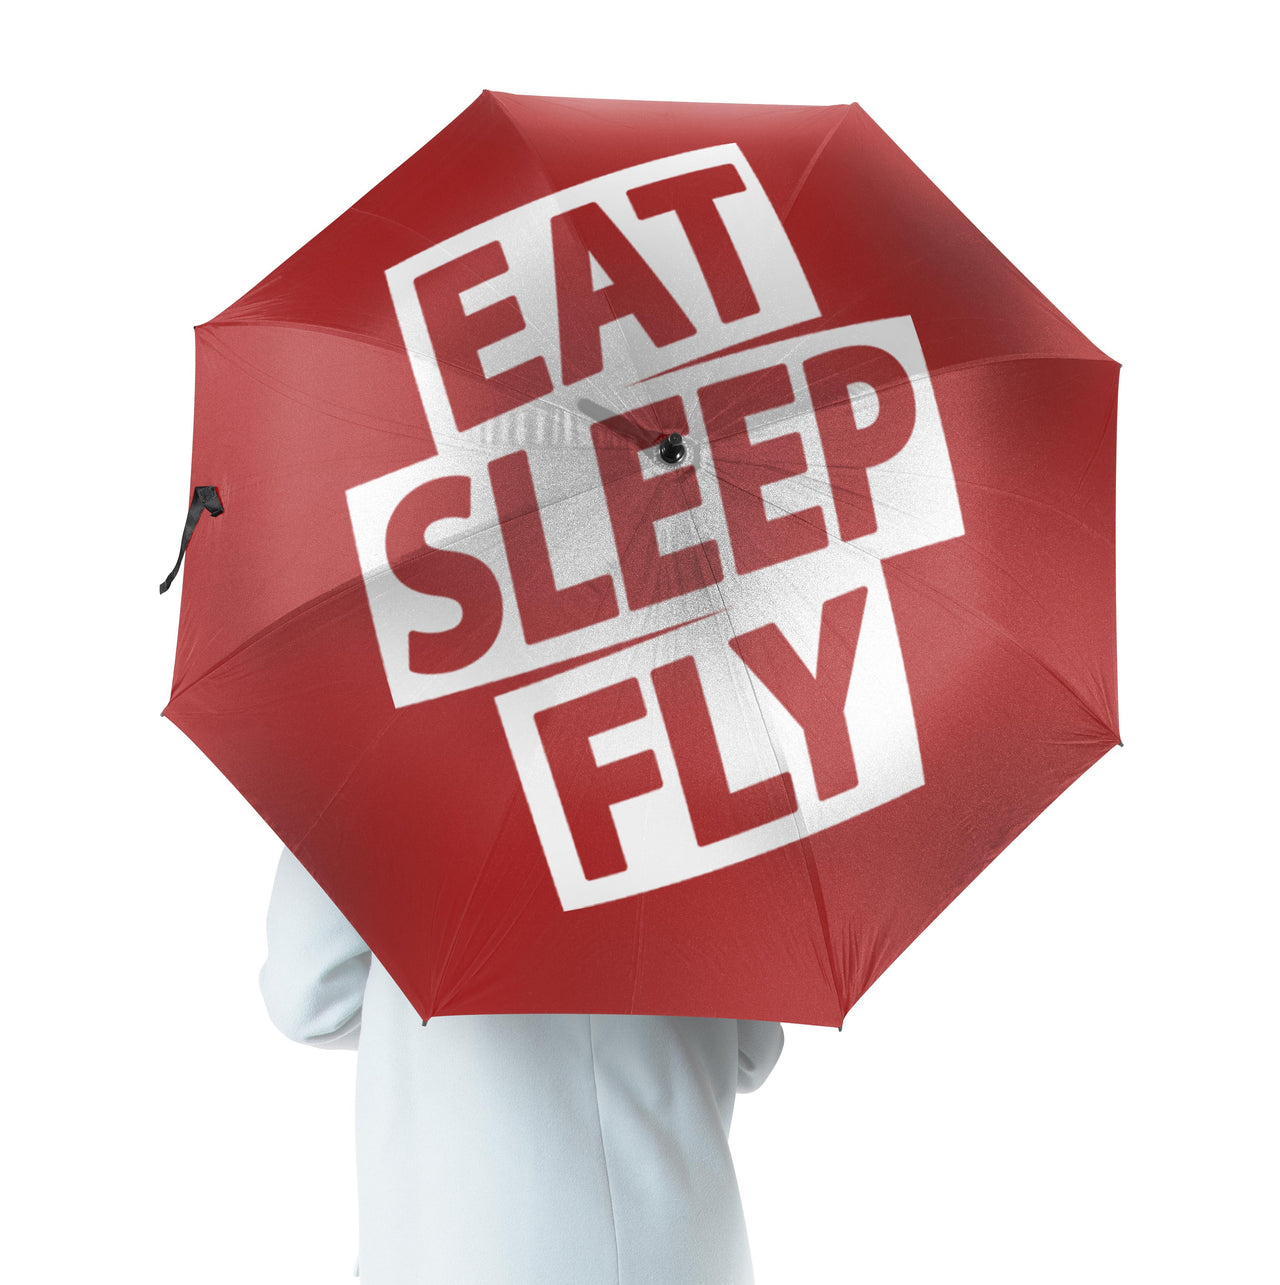 Eat Sleep Fly Designed Umbrella